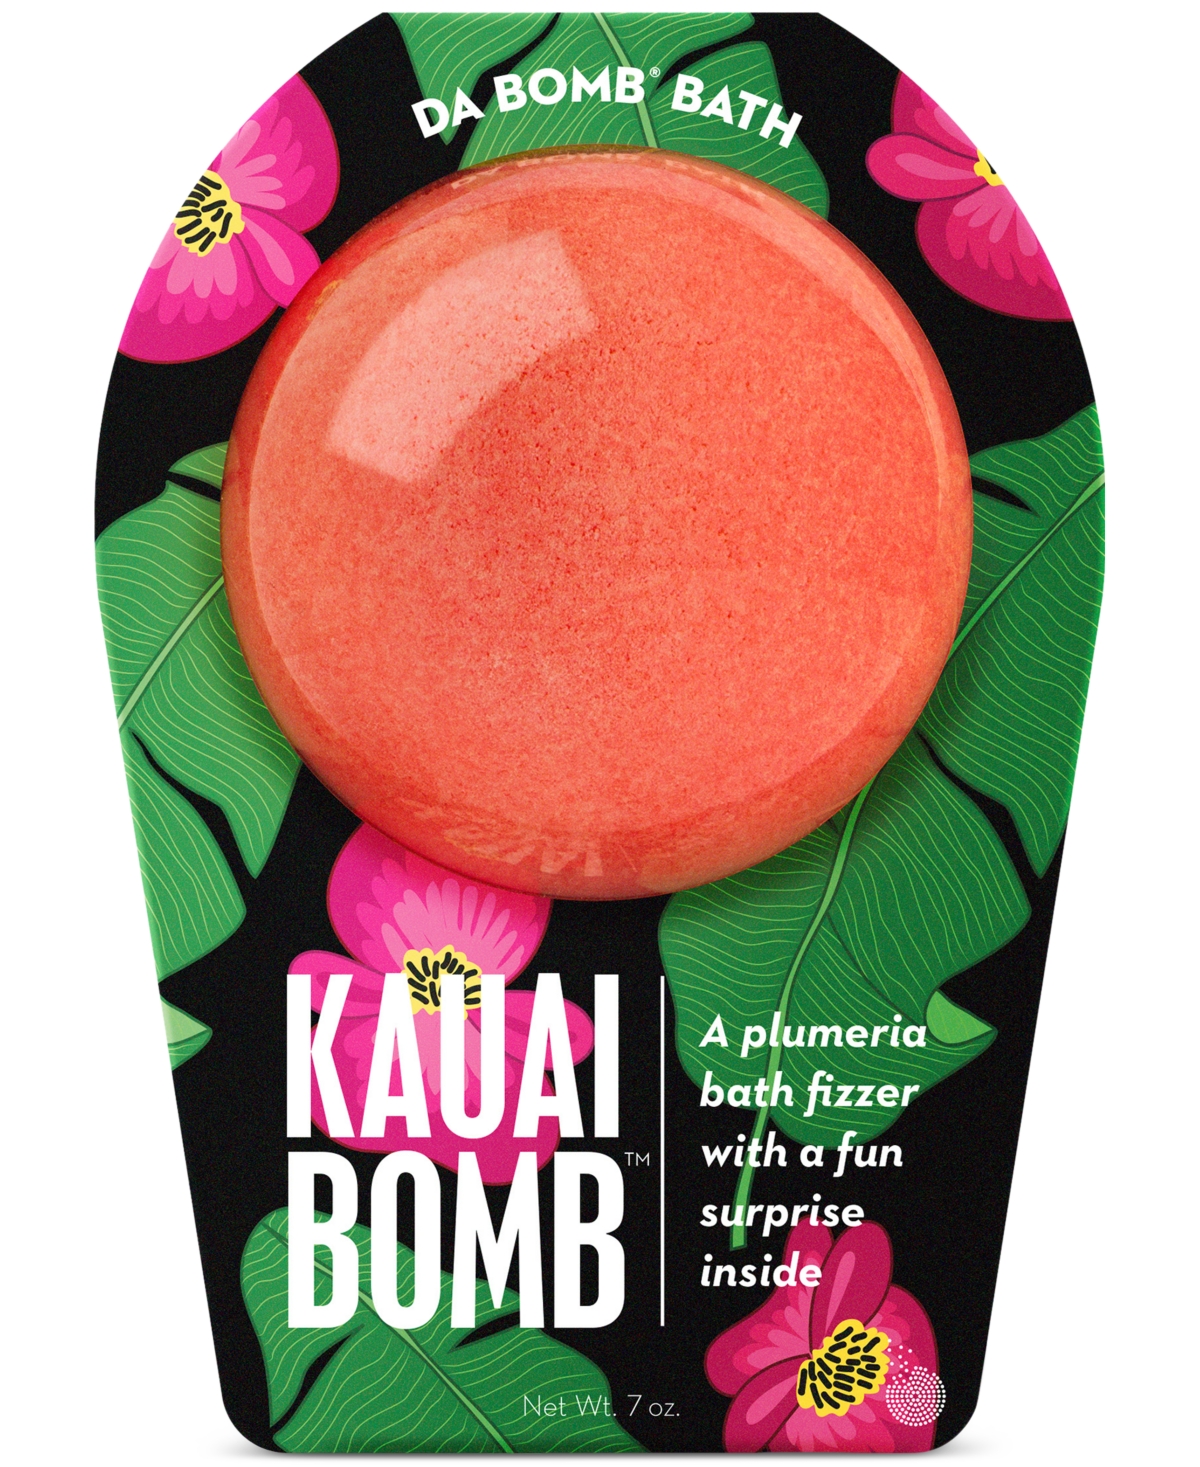 Kauai Bath Bomb, 7 oz. - Kauai Bomb